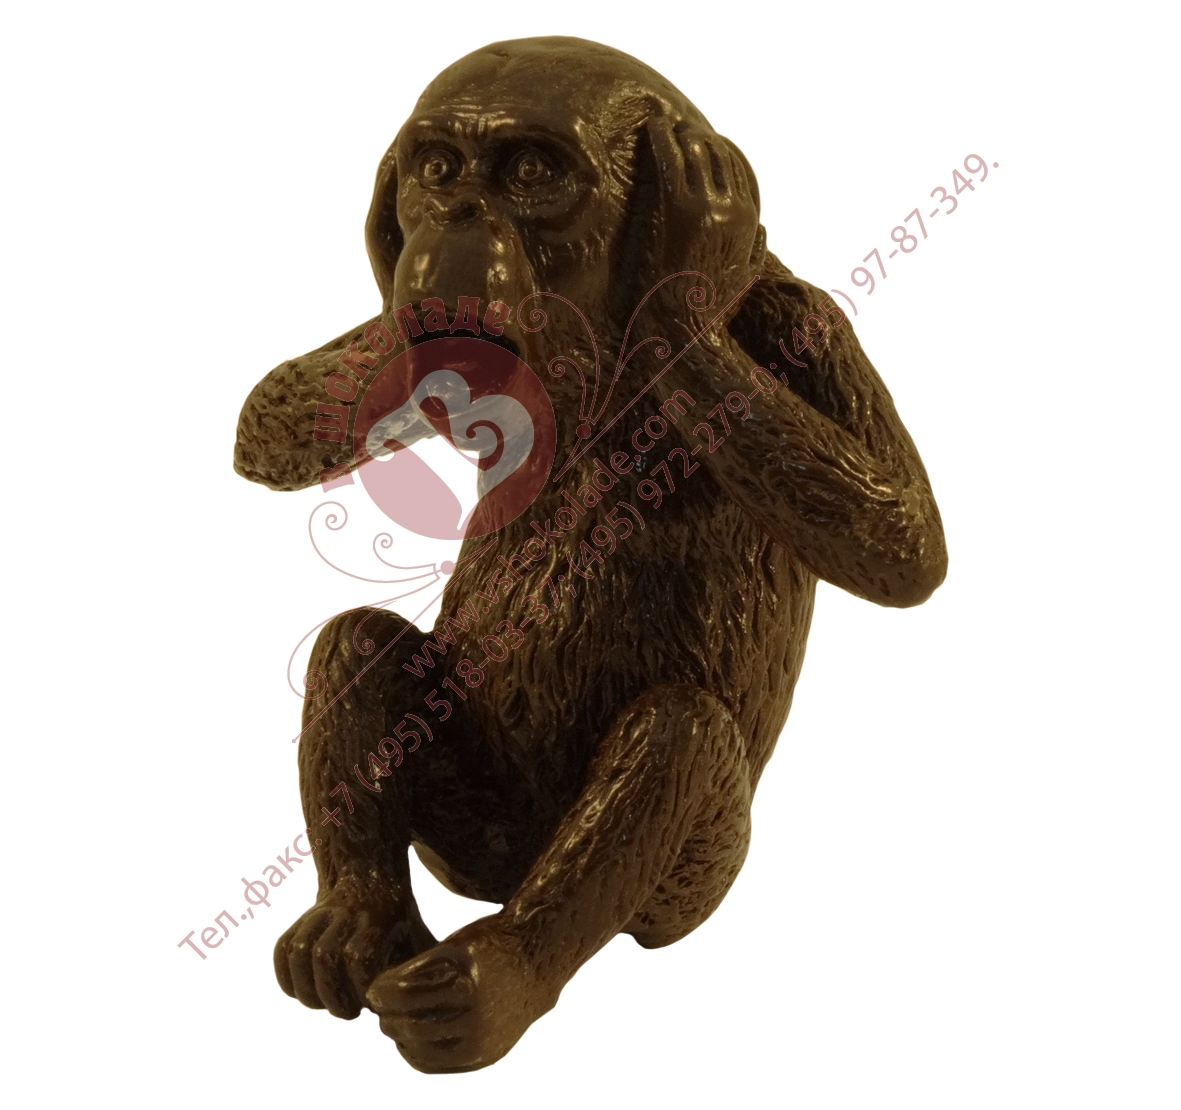 Шоколадная обезьянка - символ 2016 года. Артикул 2016 ob_008. Вес 110 гр.